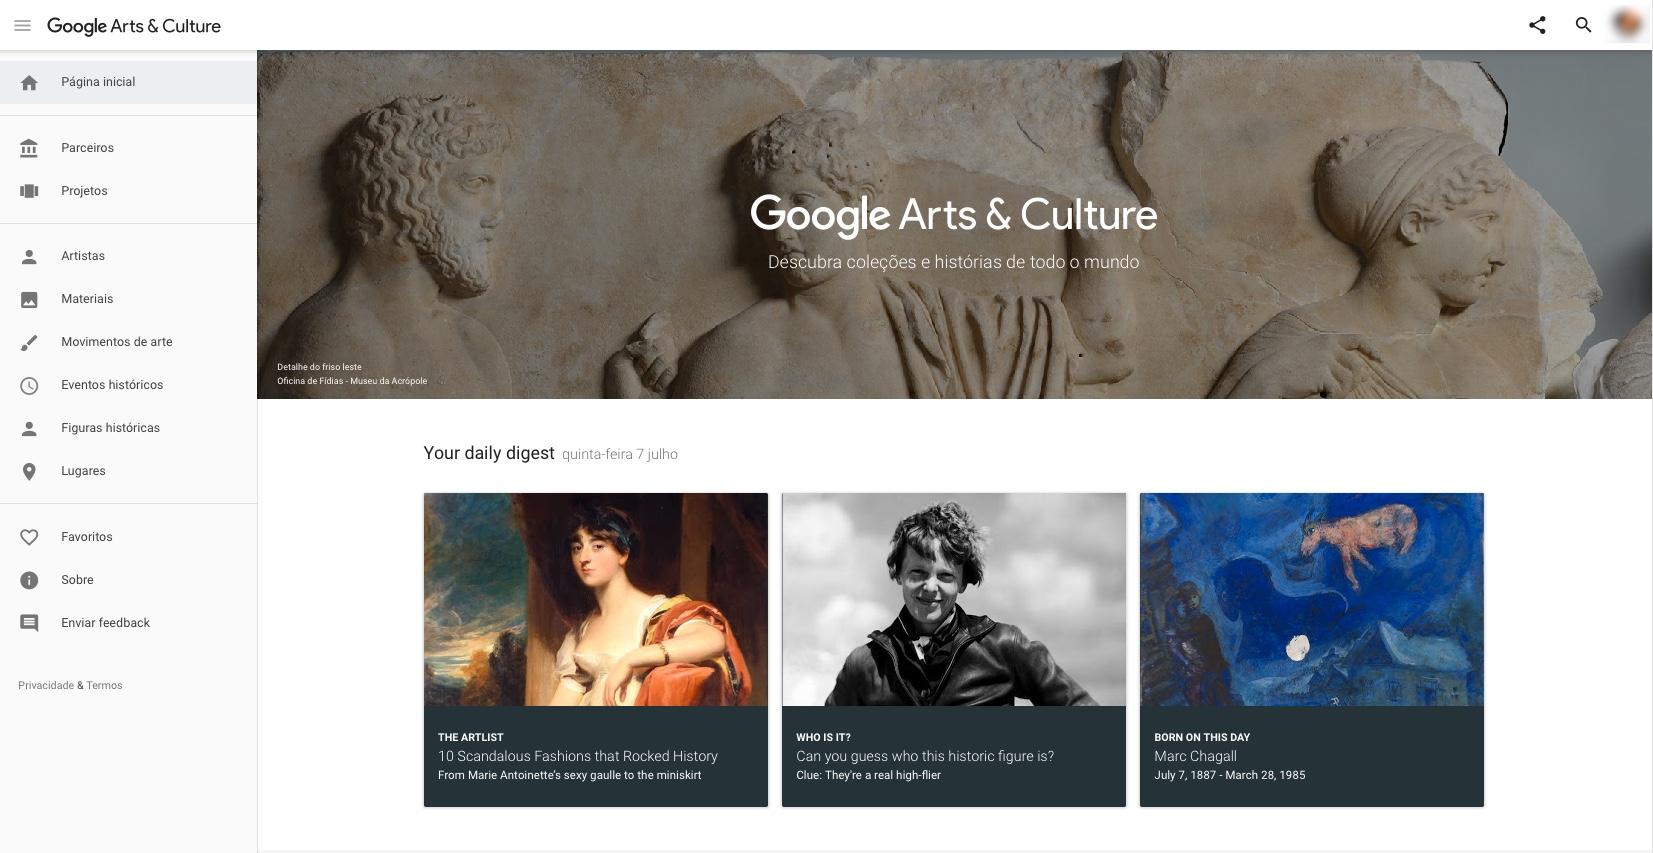 Pagina do Google Arts & Culture